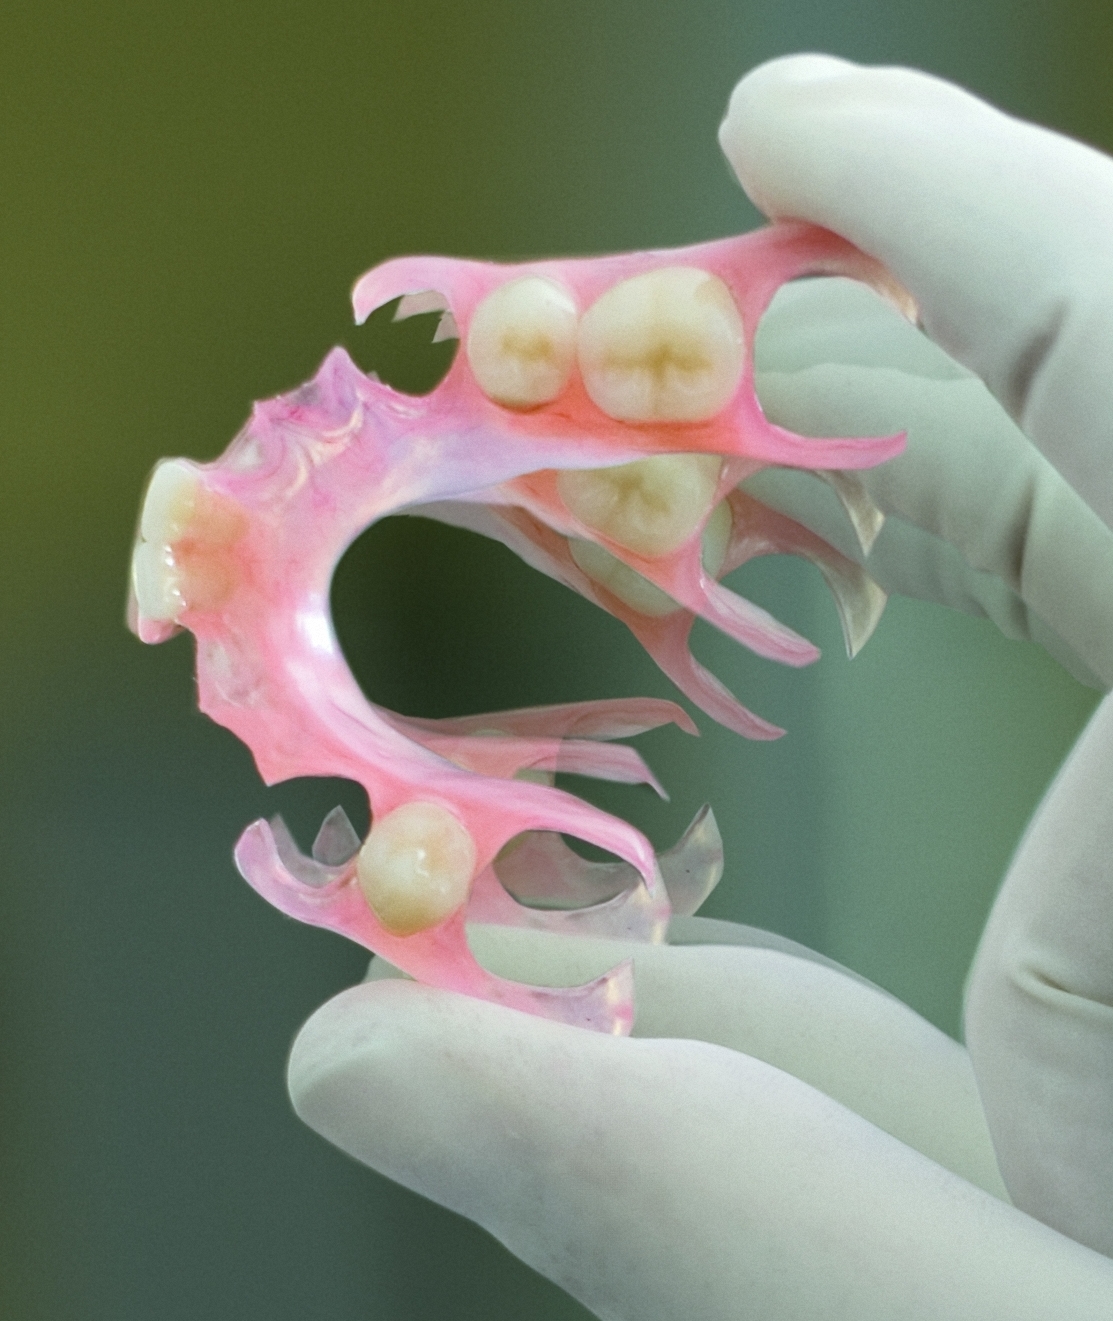 valplast flexible partial dentures showing flex